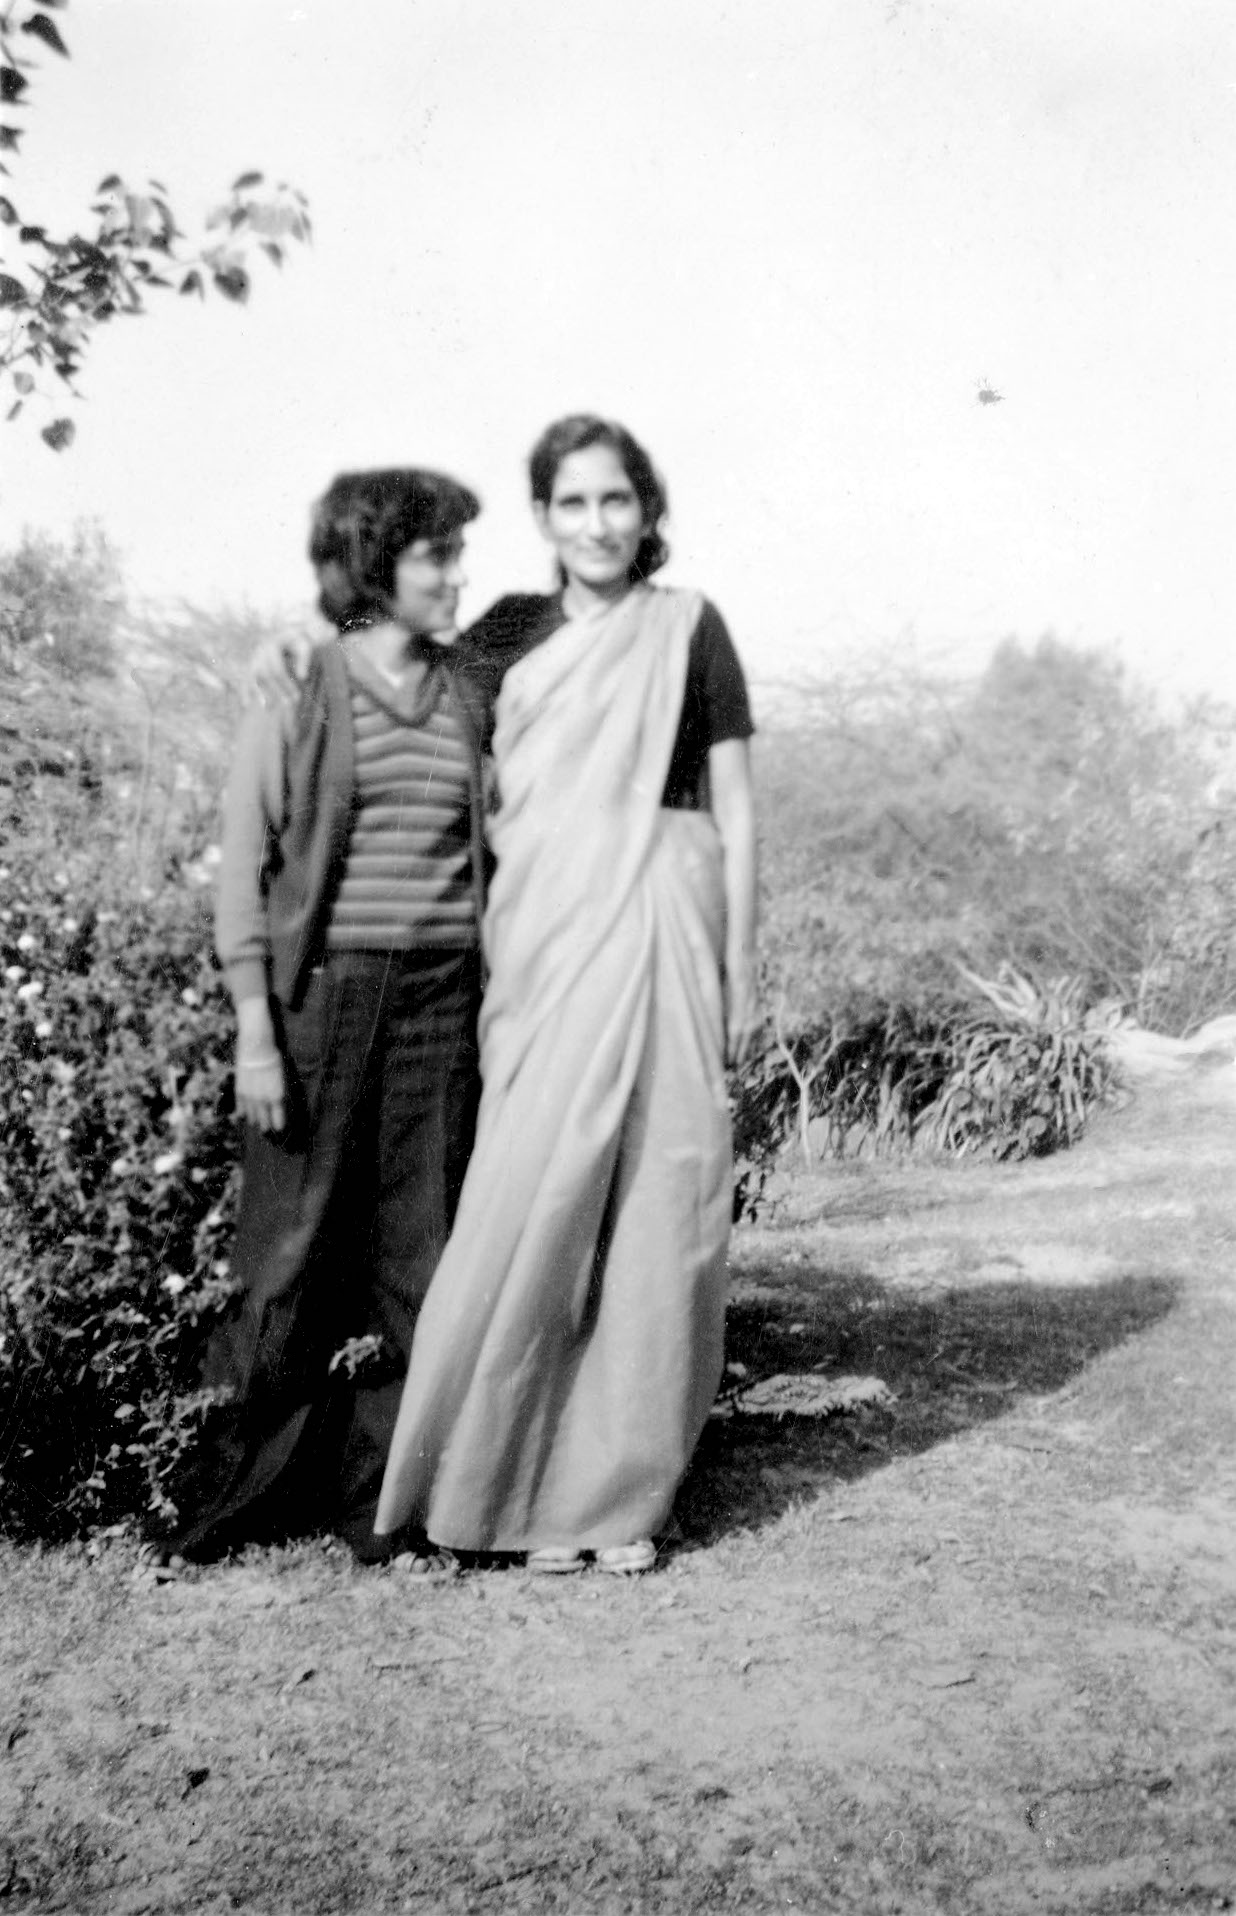 Ruth Vanita with her mother in Buddha Jayanti Park, Delhi, early 1980s. Photo courtesy of Ruth Vanita.